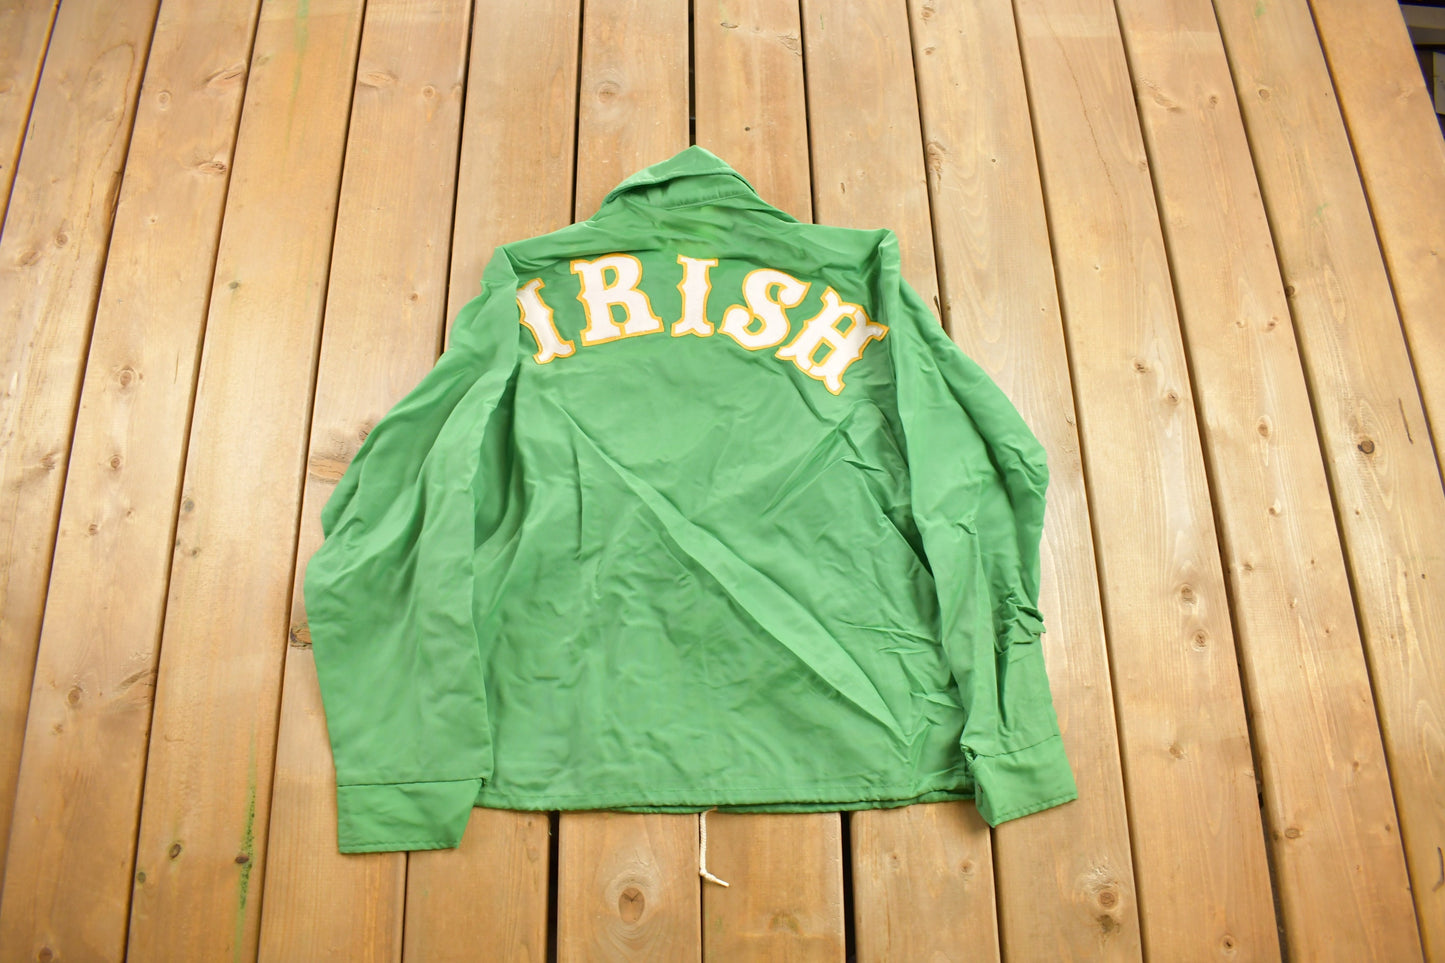 Vintage 1970s University of Notre Dame Fighting Irish Jacket / Embroidered / Varsity Jacket / Sportswear / Americana